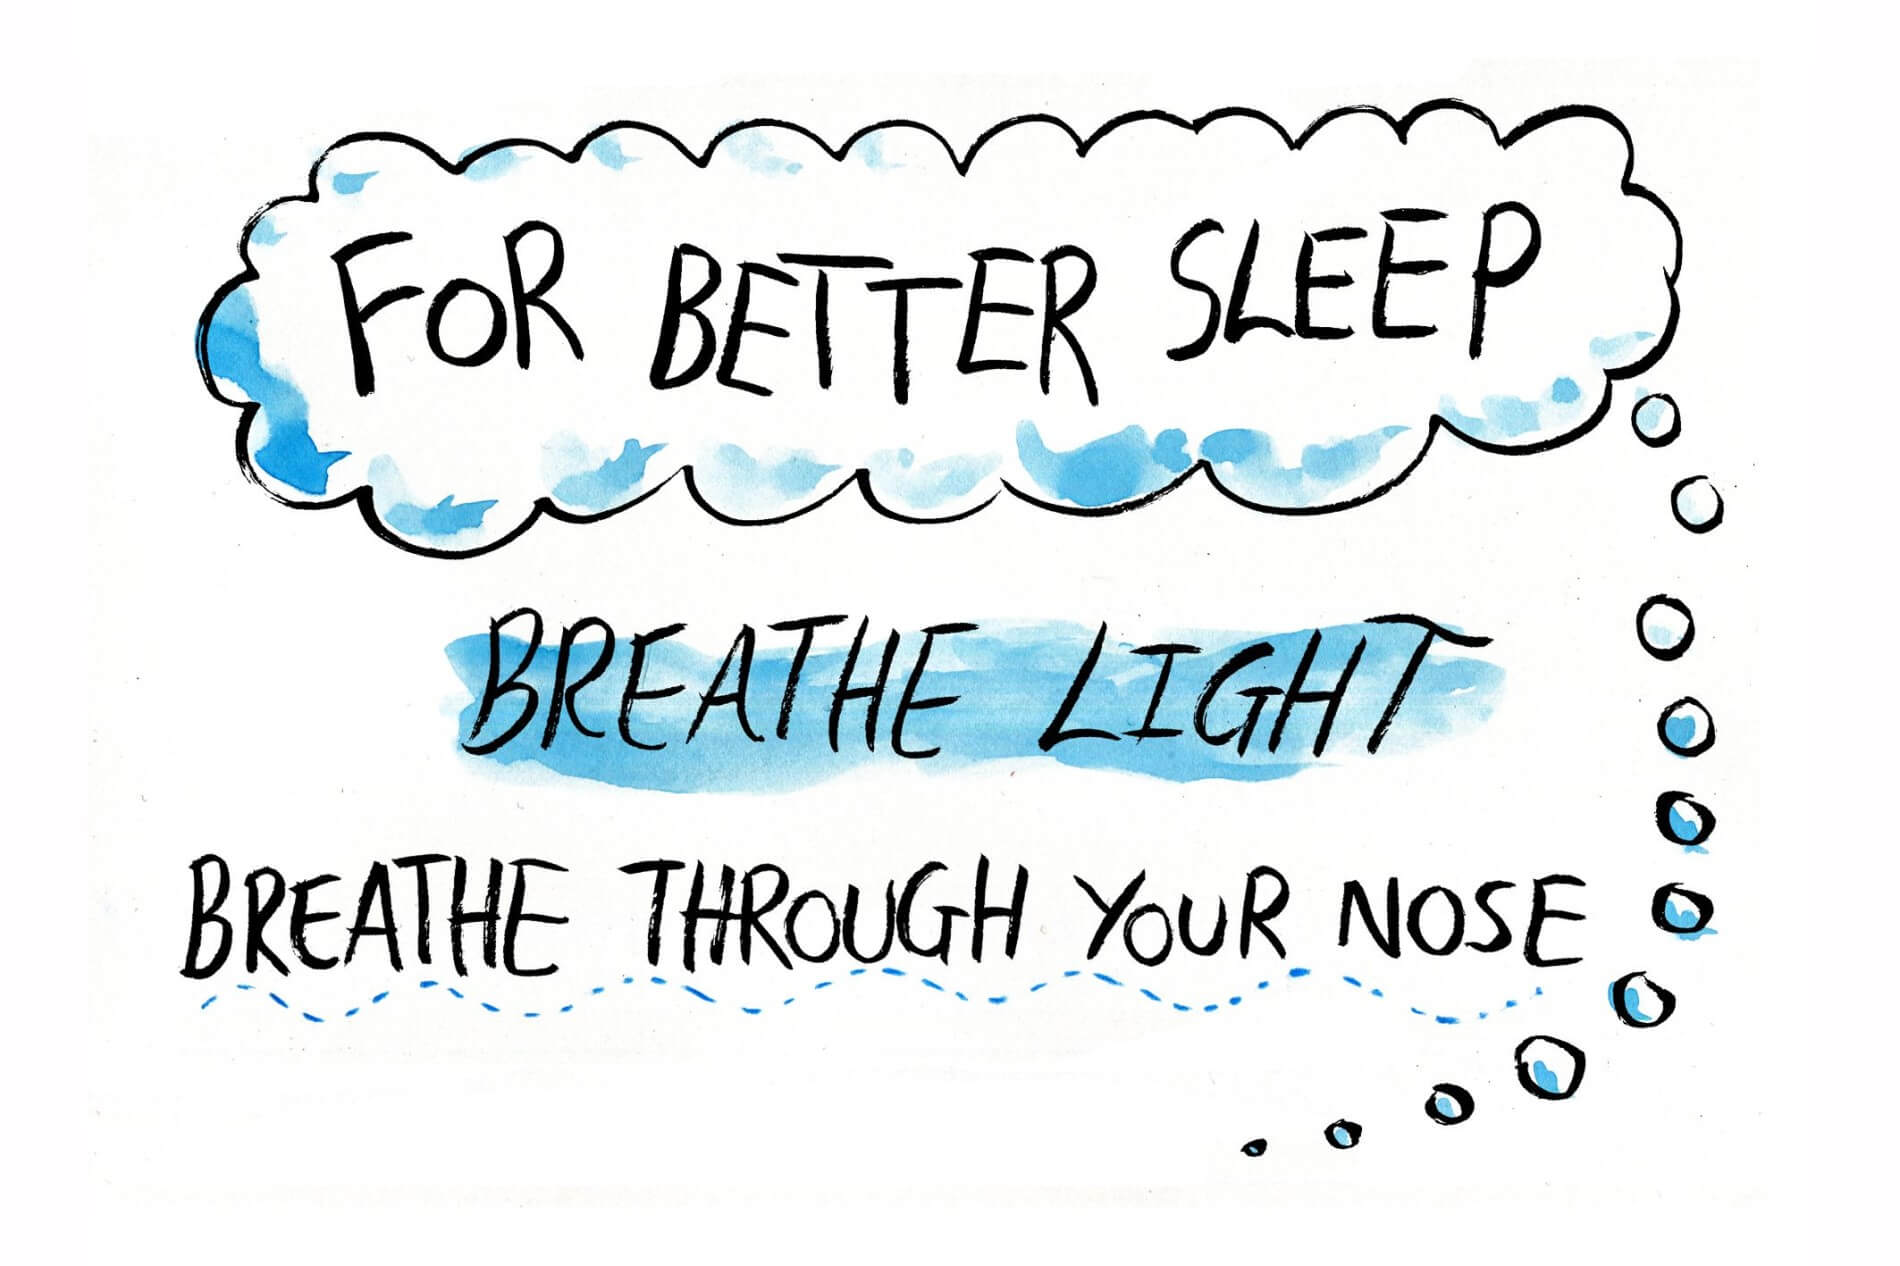 Nose breathing and better sleep - illustration